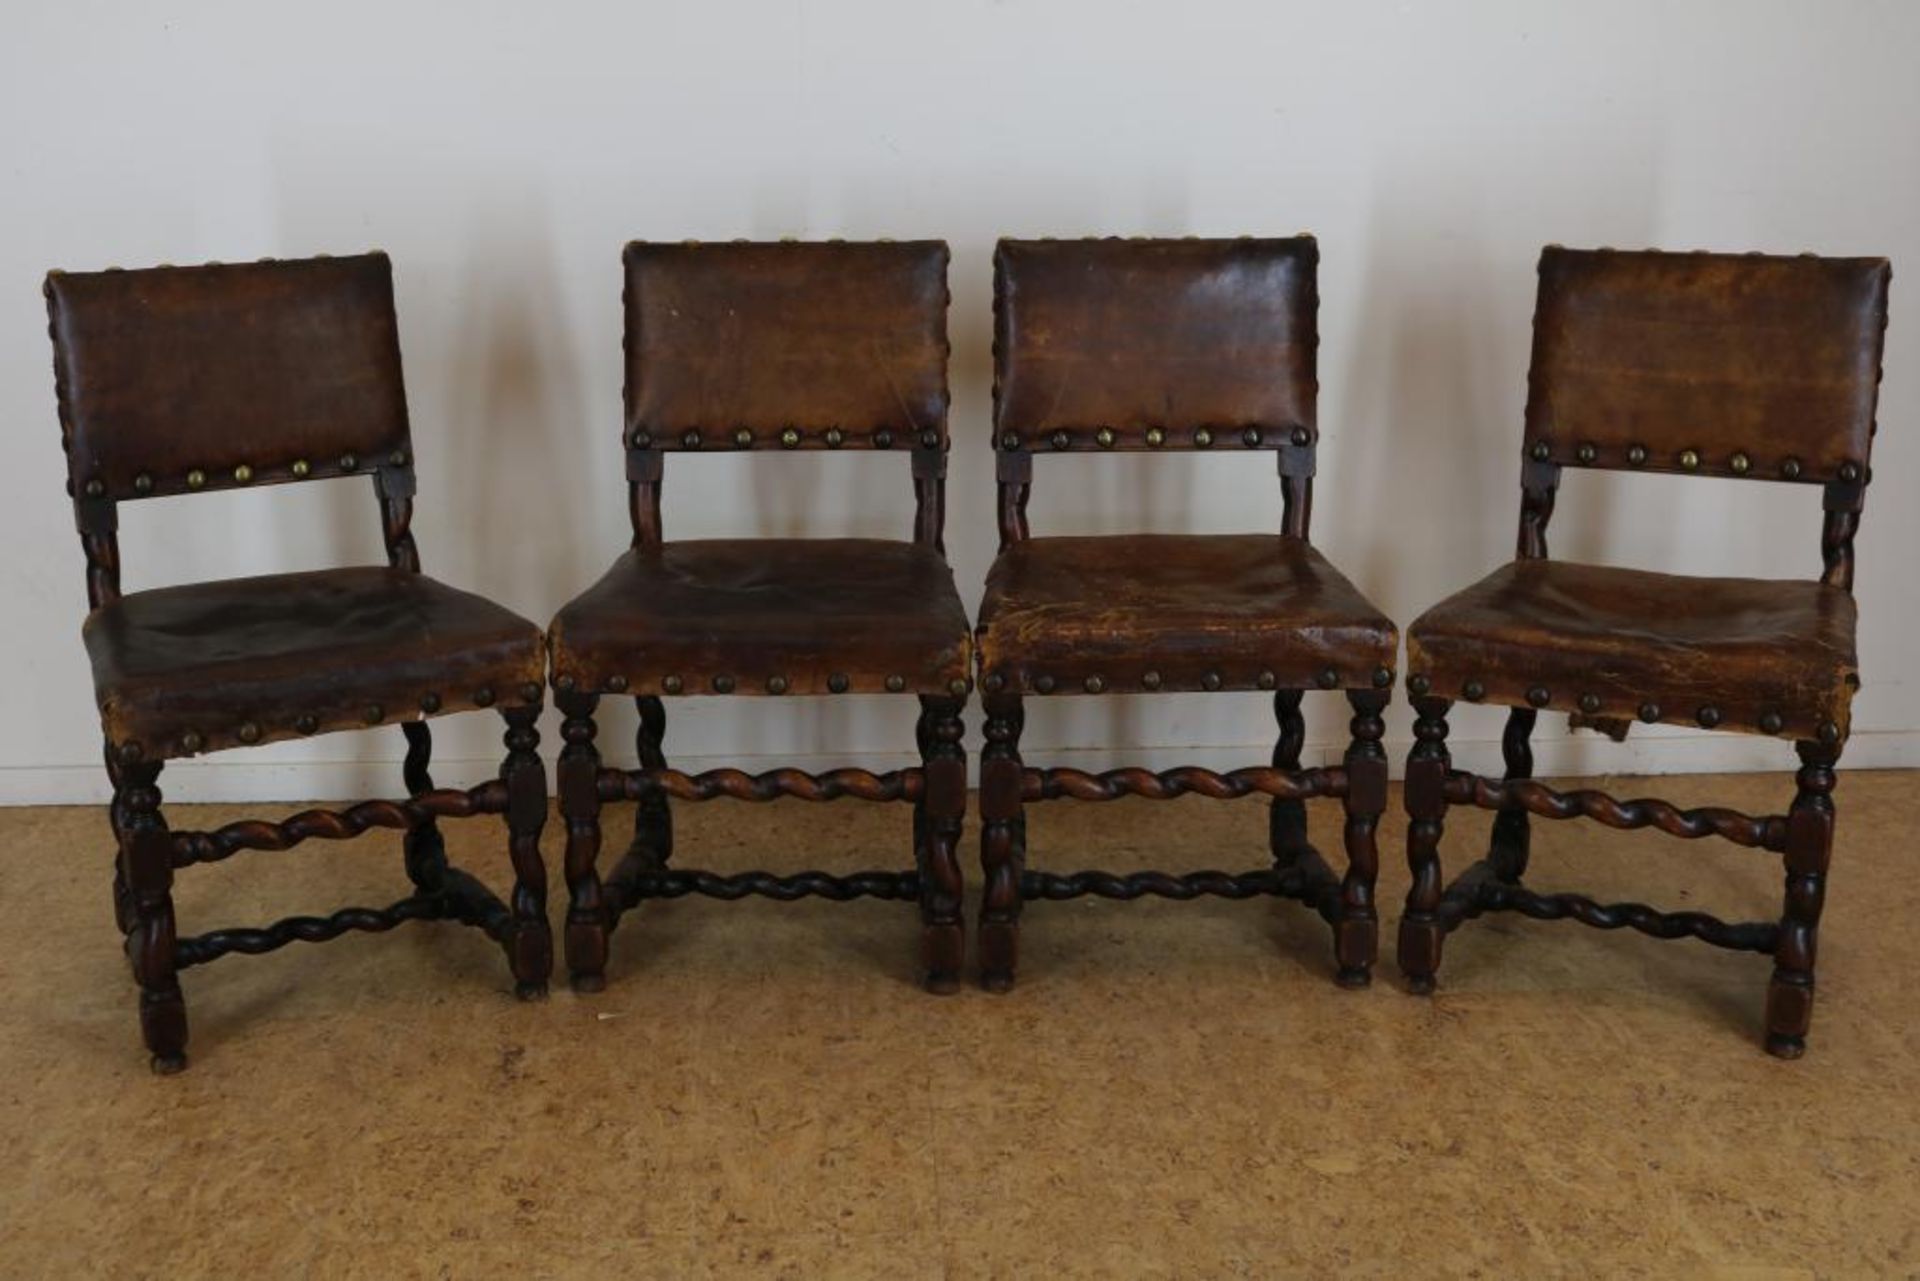 Serie van 4 Renaissance stoelen